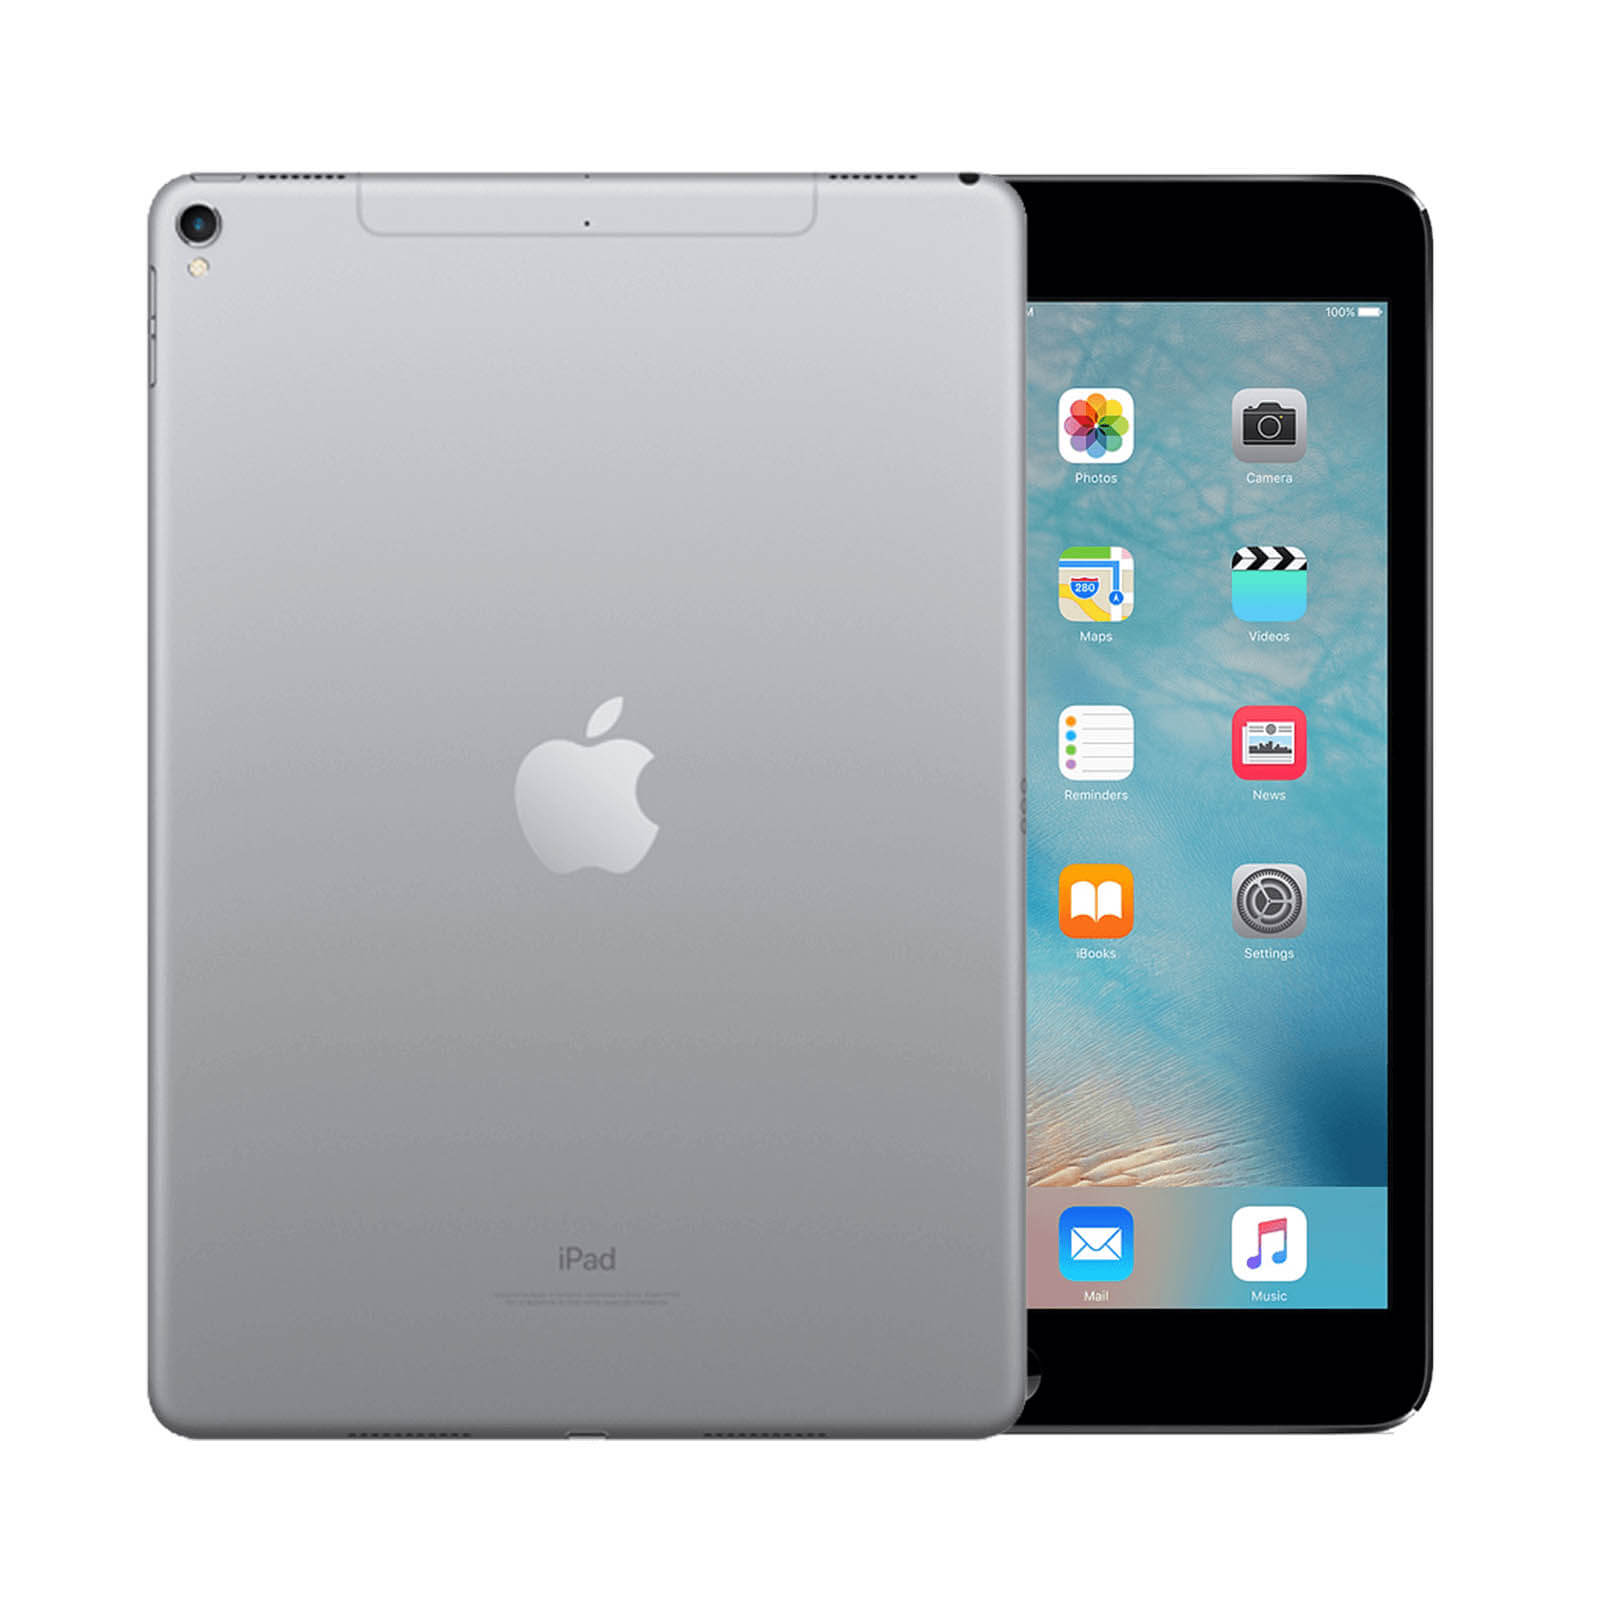 Apple iPad 7 128GB WiFi & Cellular Space Grey Good 128GB Space Grey Good